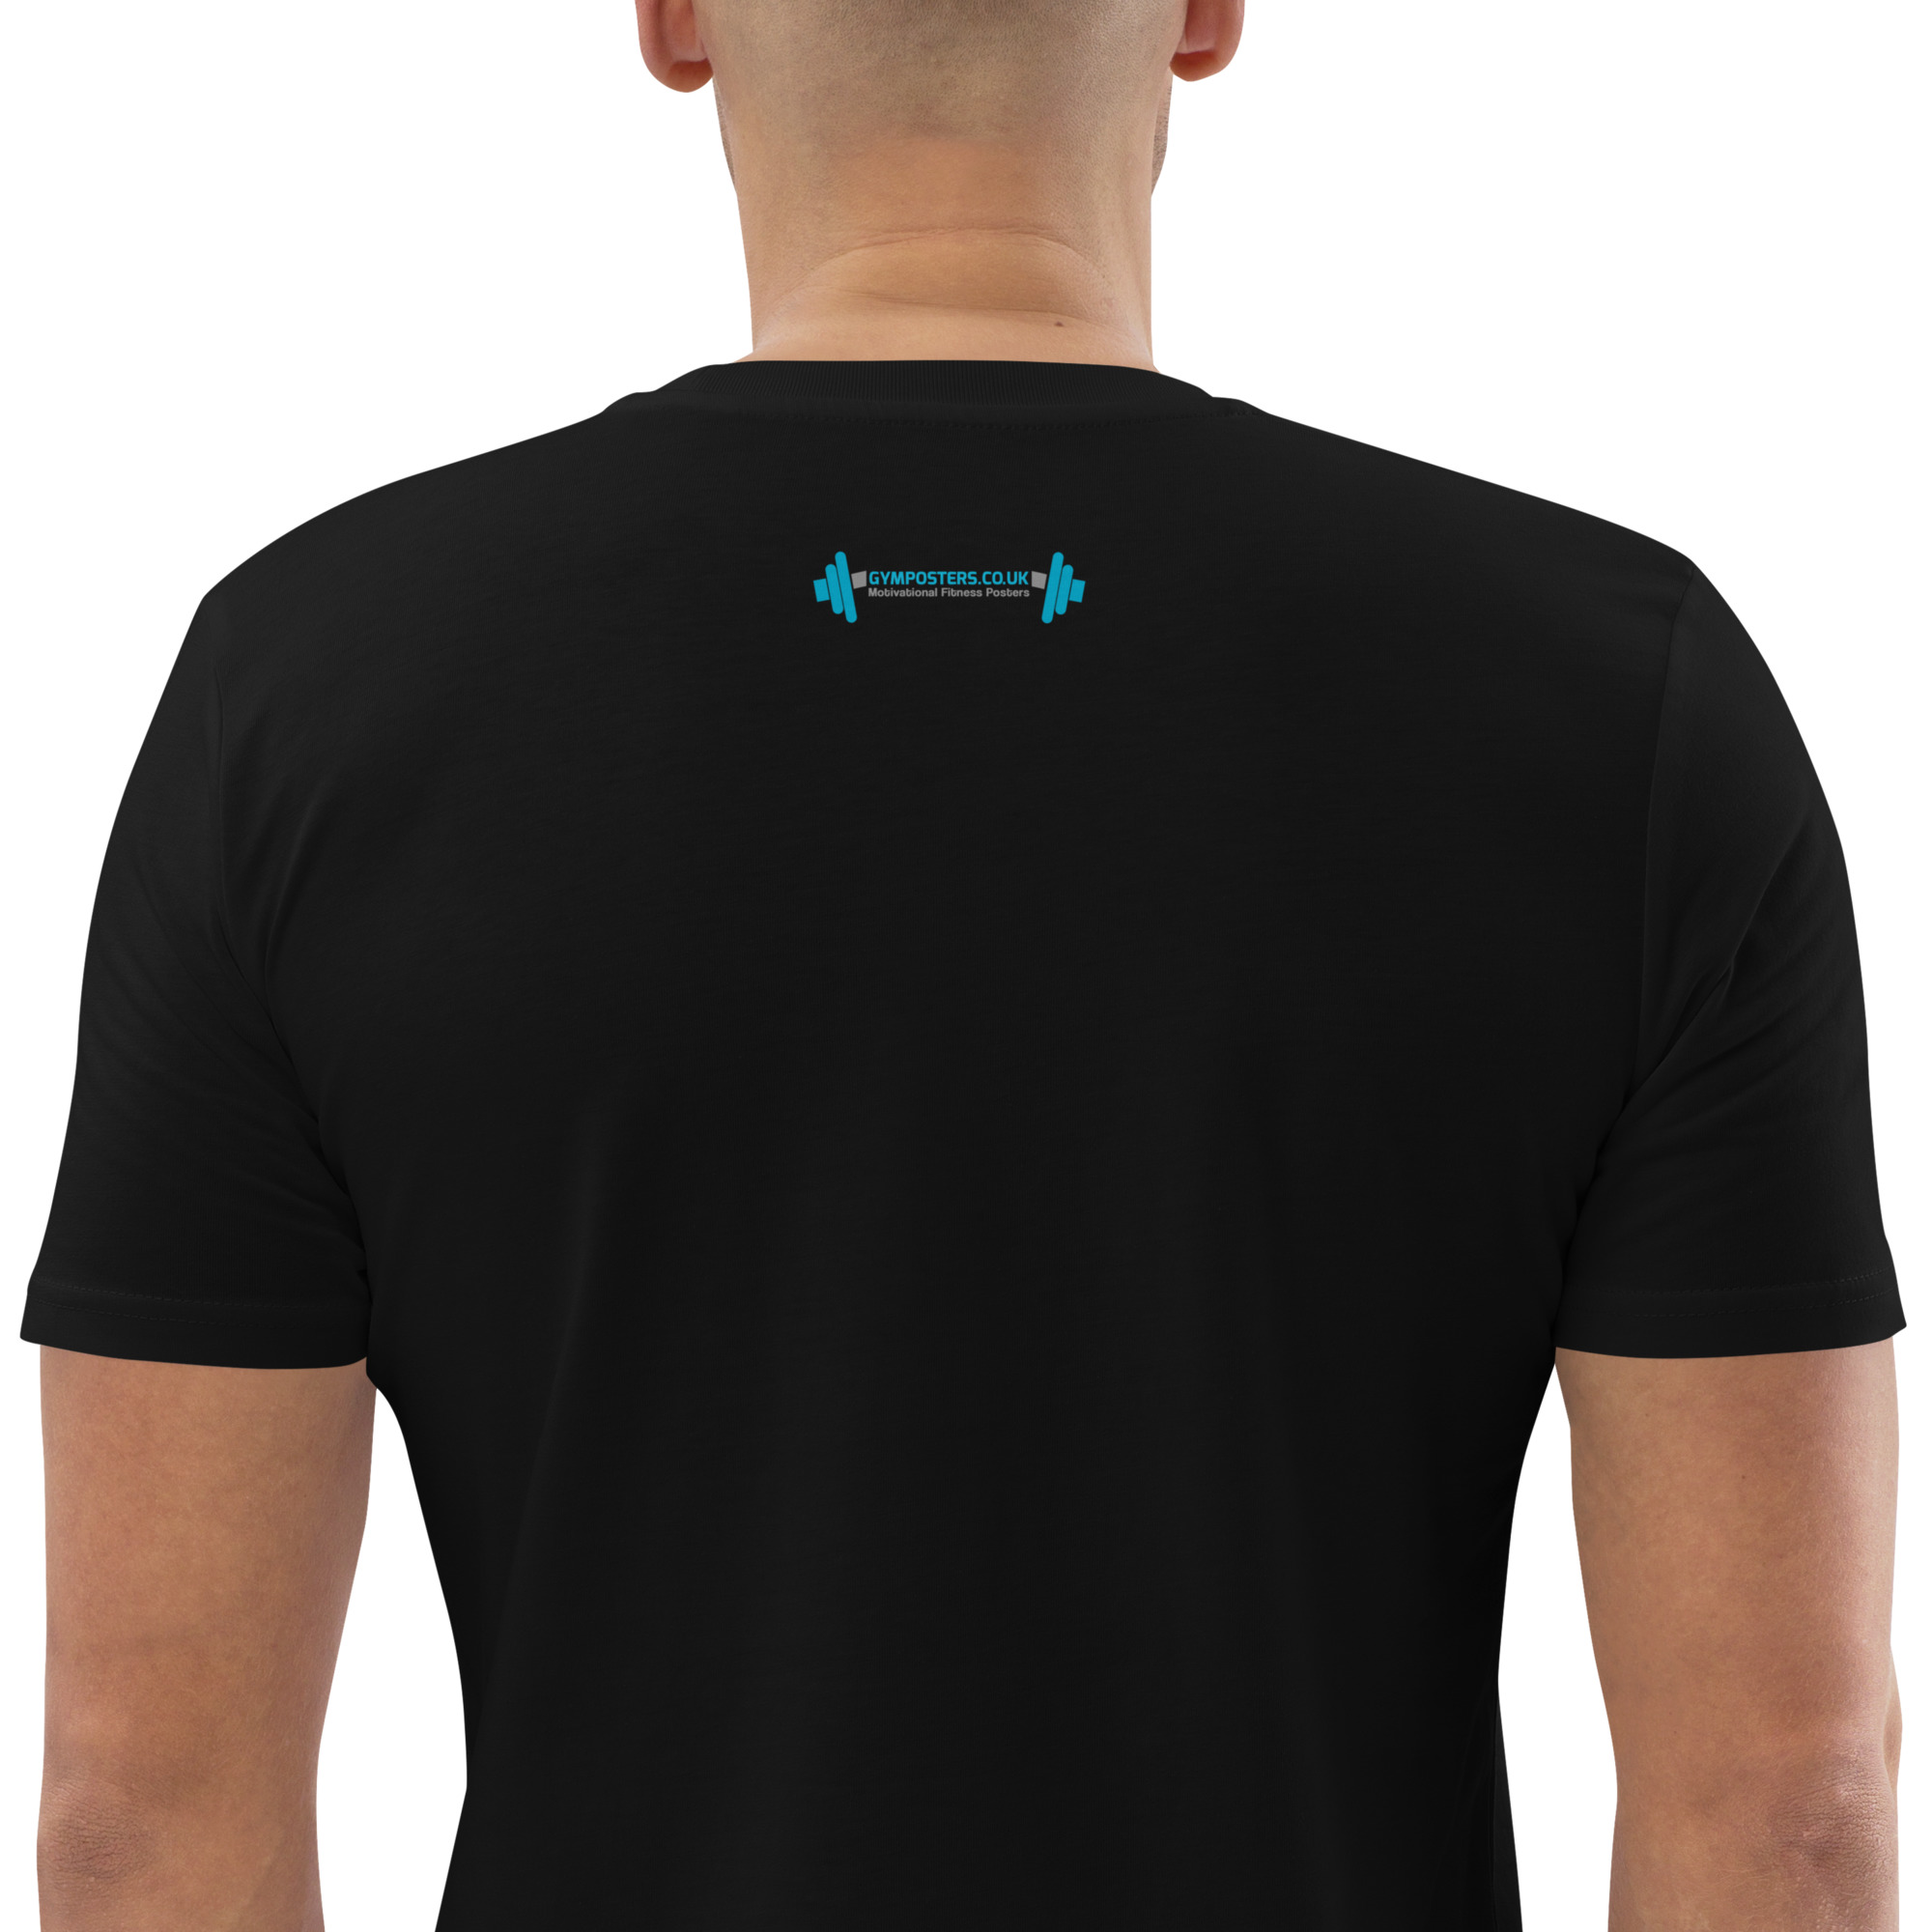 unisex-organic-cotton-t-shirt-black-zoomed-in-2-6578590ca7b70.jpg